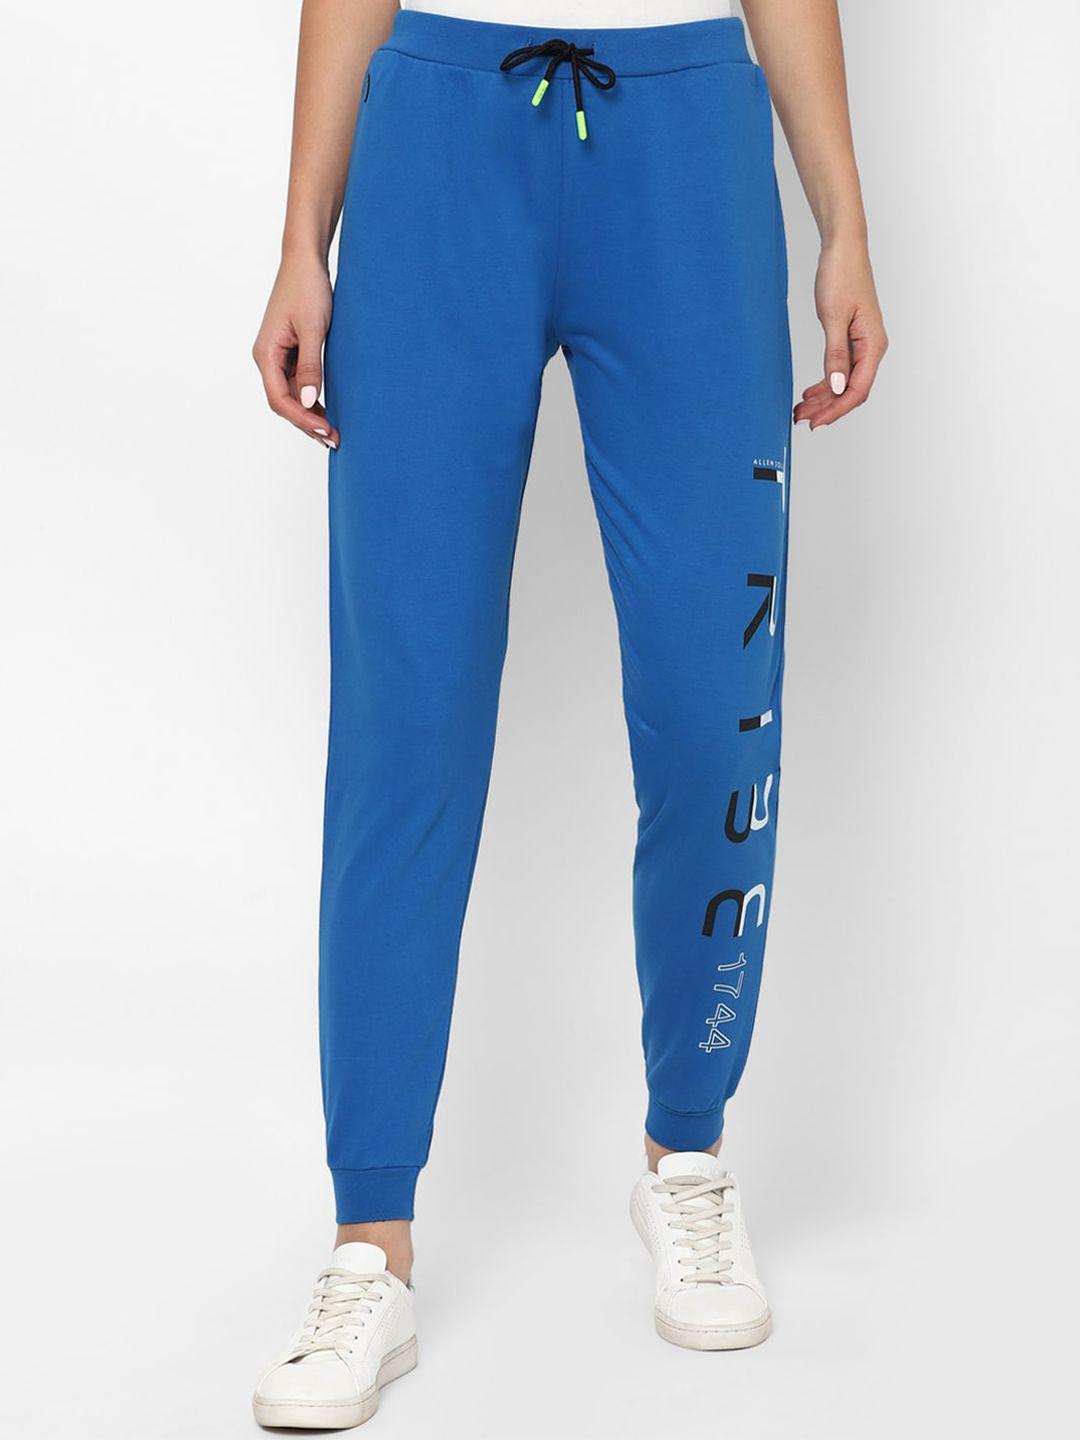 allen-solly-woman-women-blue-regular-fit-printed-cotton-joggers